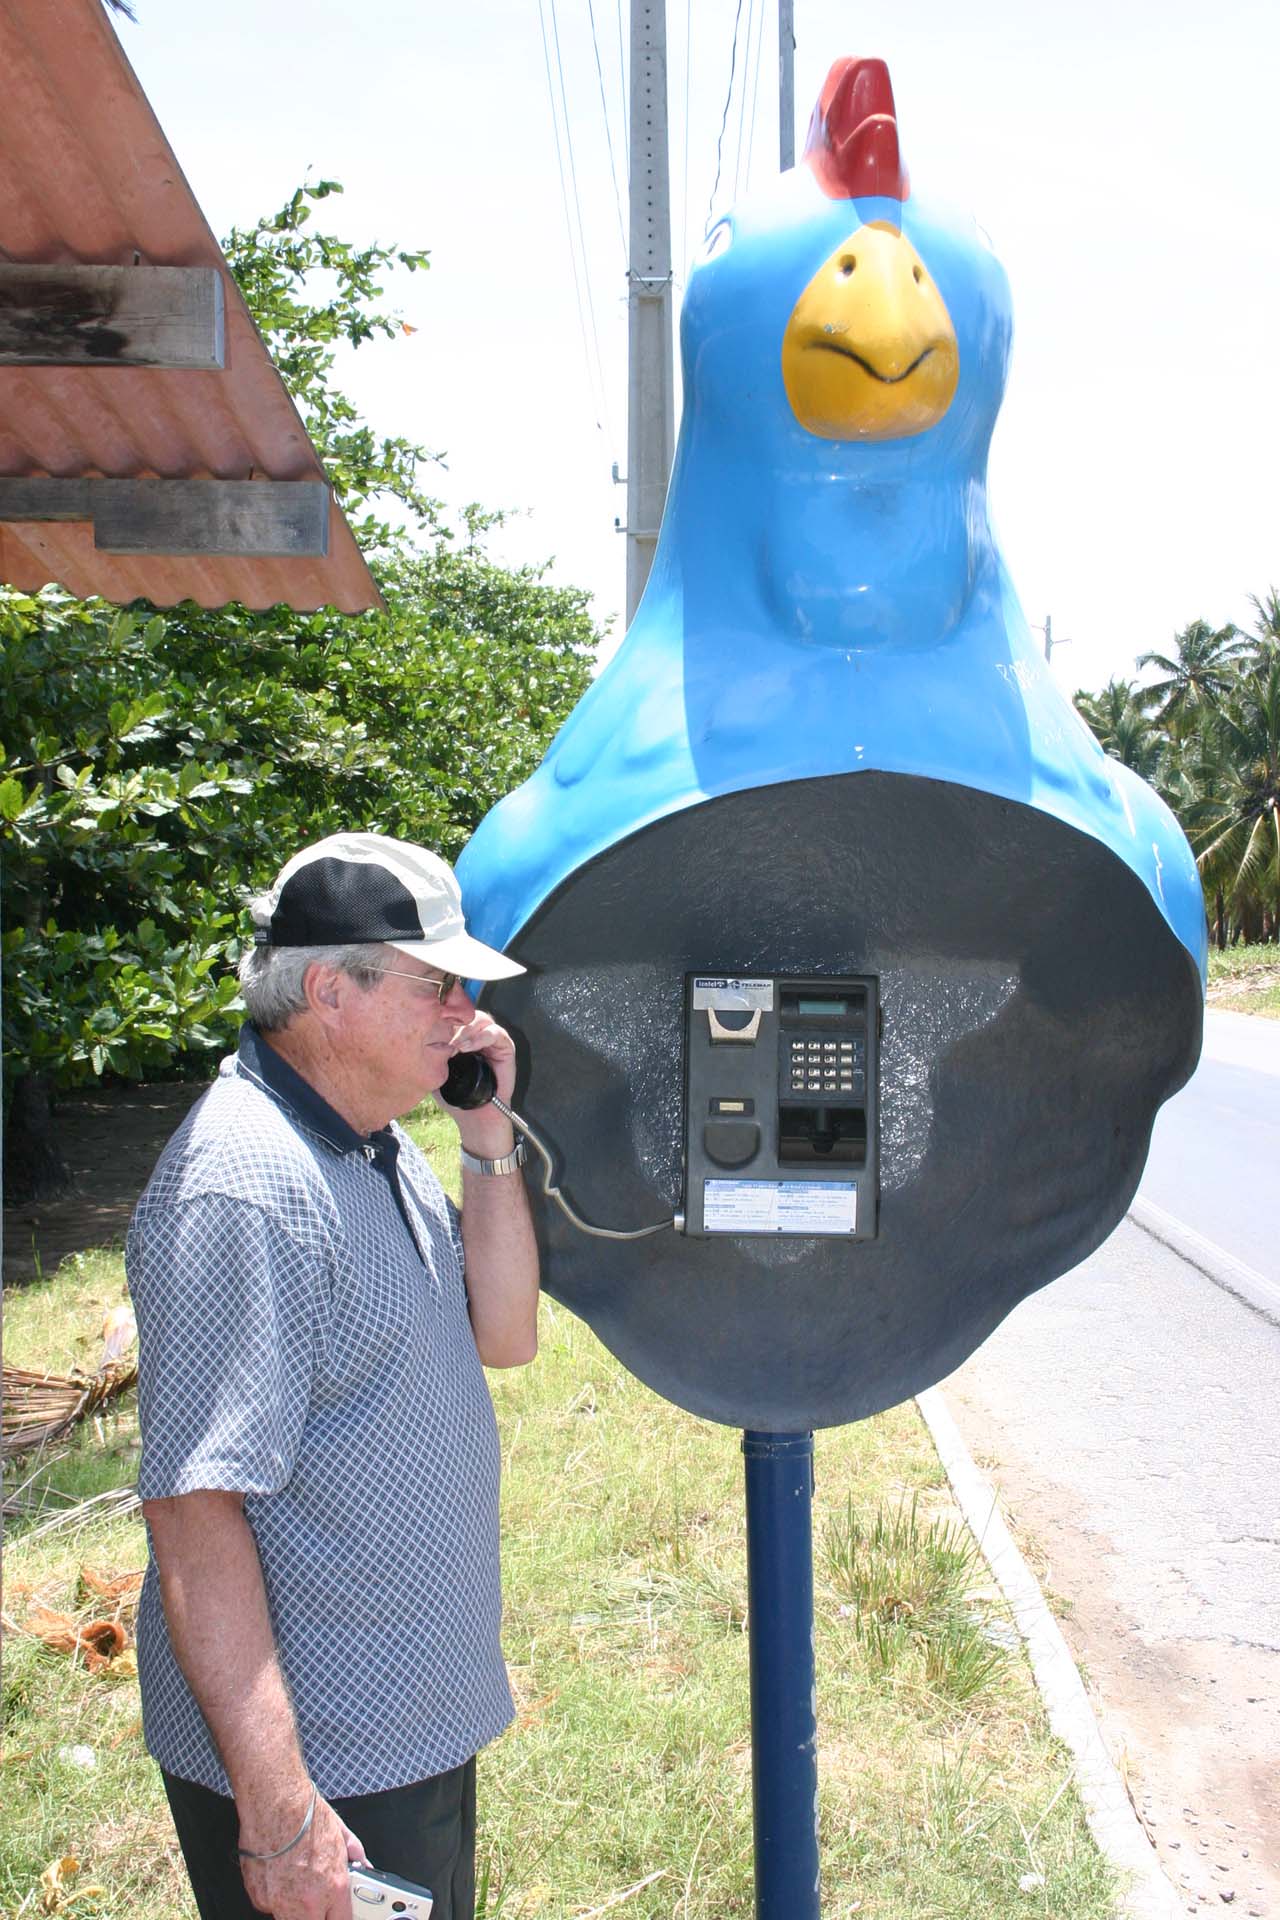 Phone booth in Chicken Port beach town